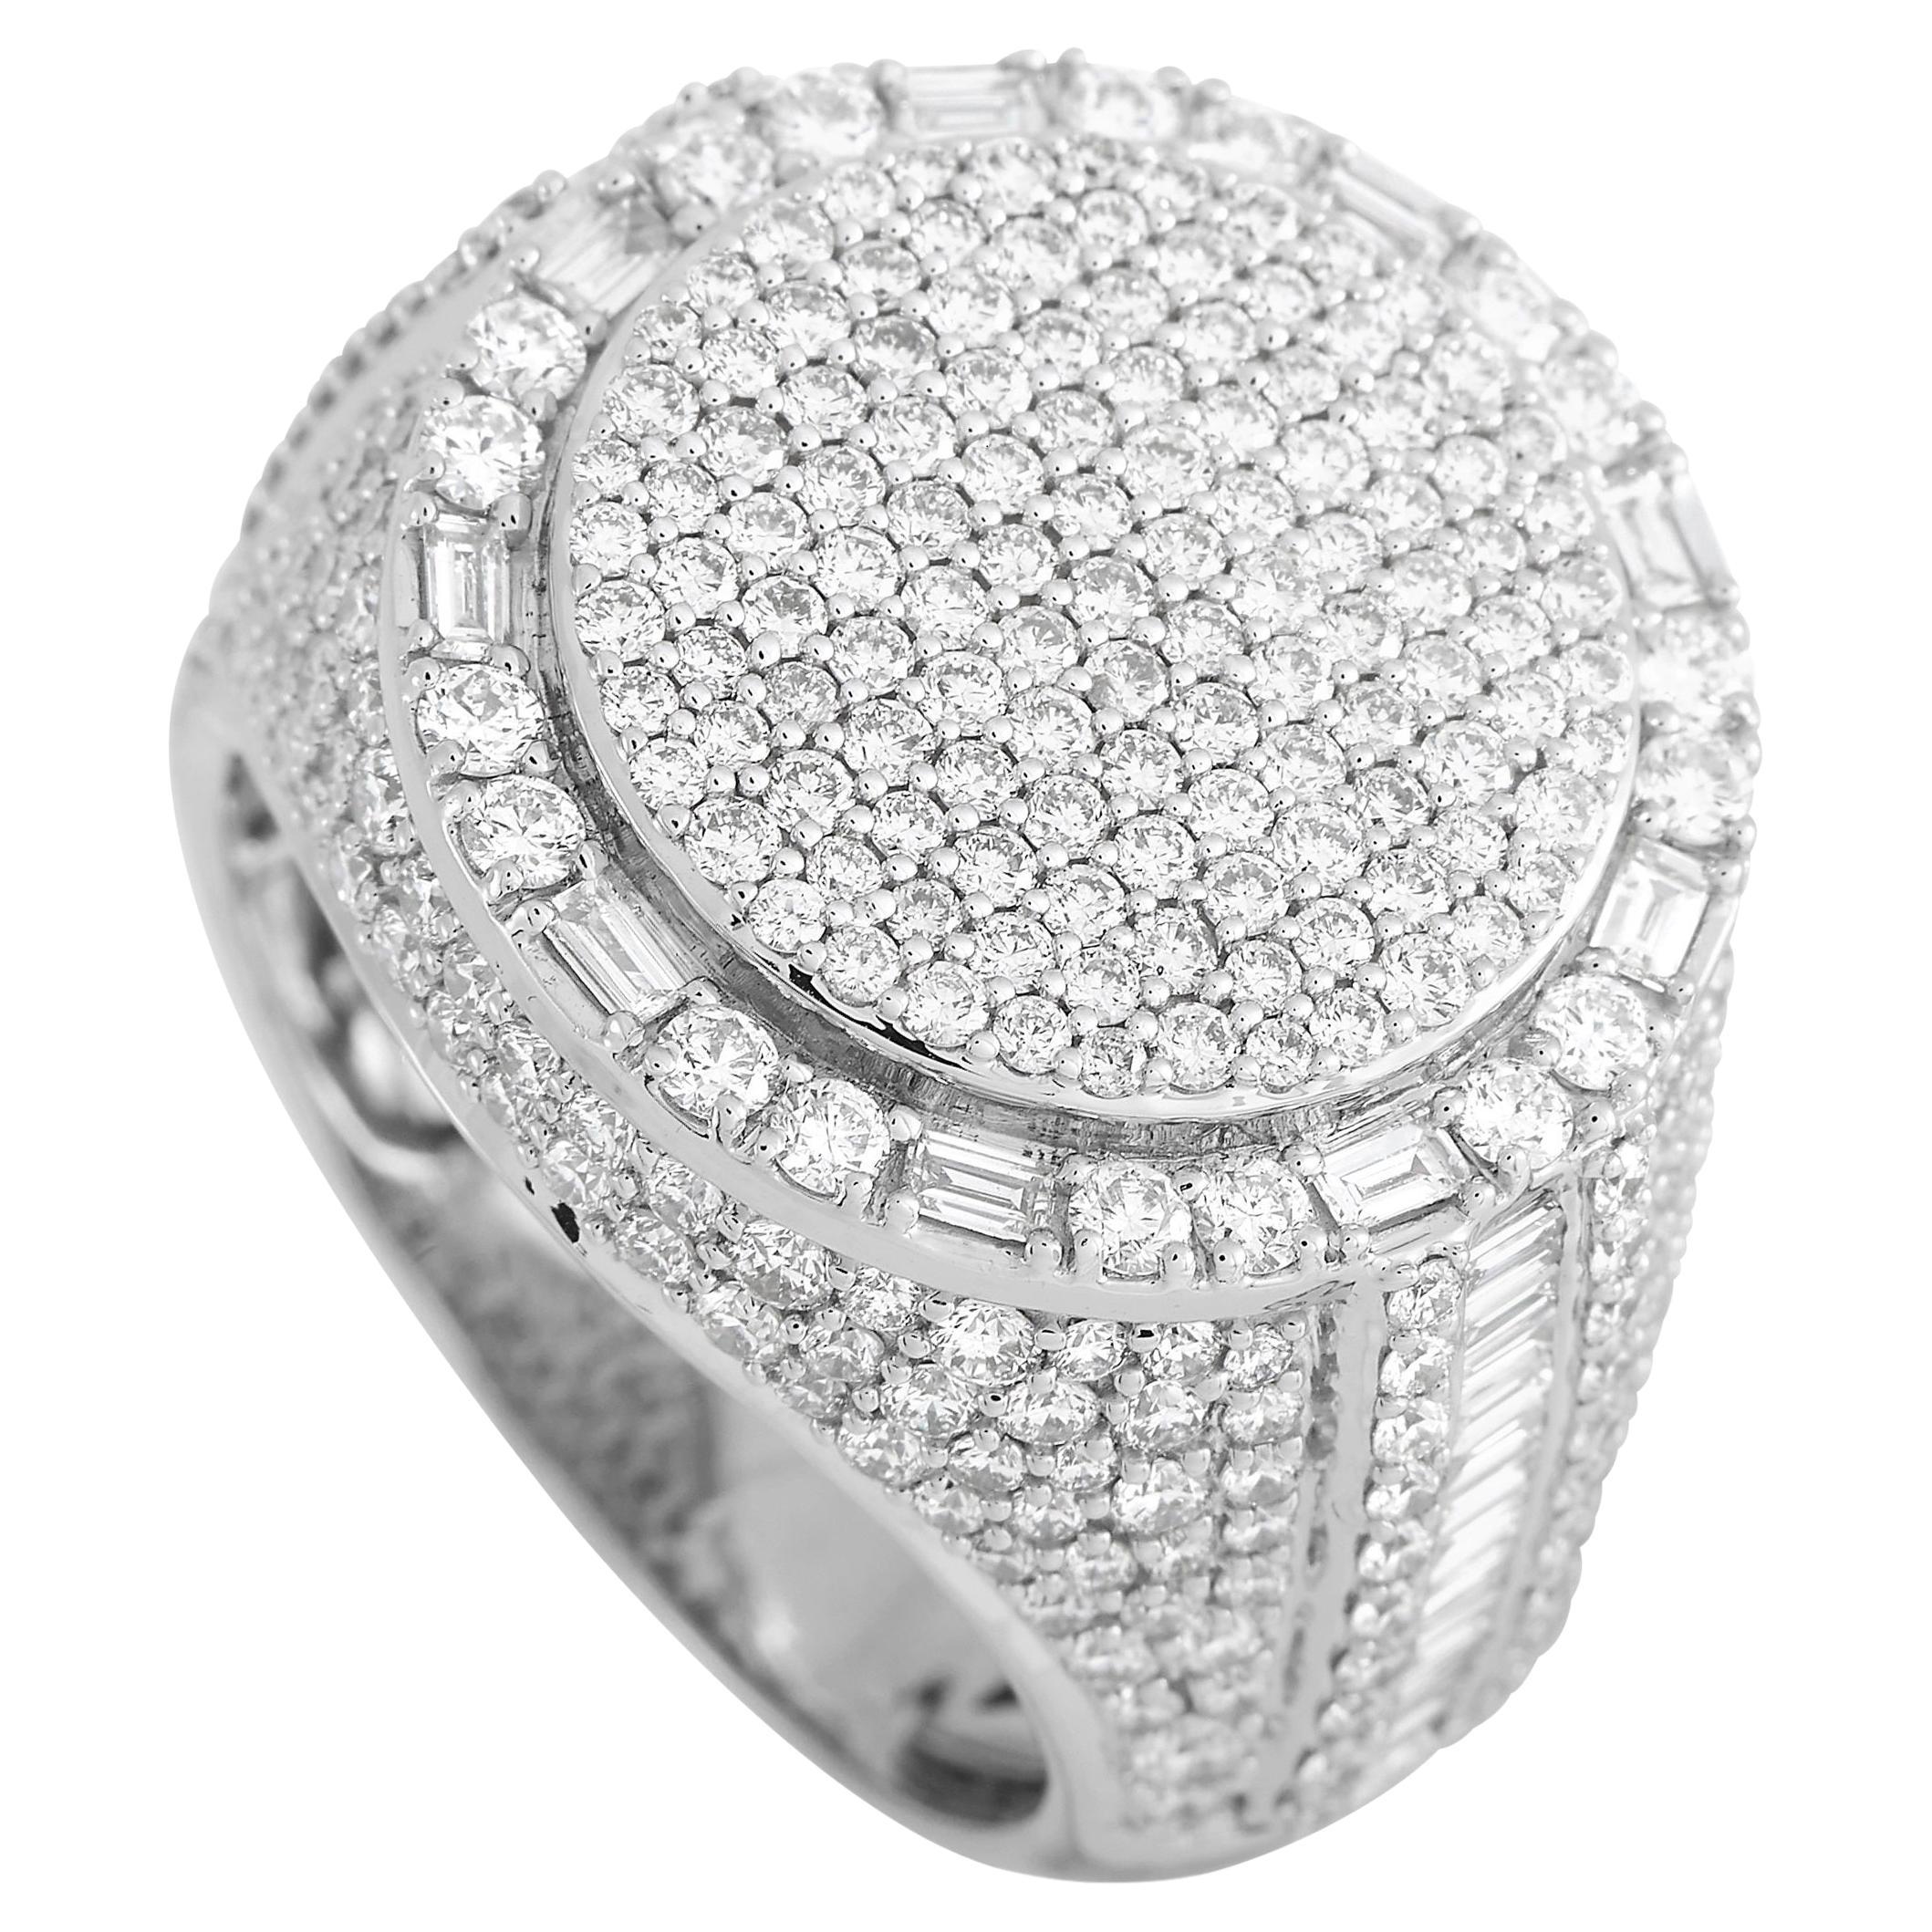 LB Exclusive 14K White Gold 4.50 Ct Diamond Ring